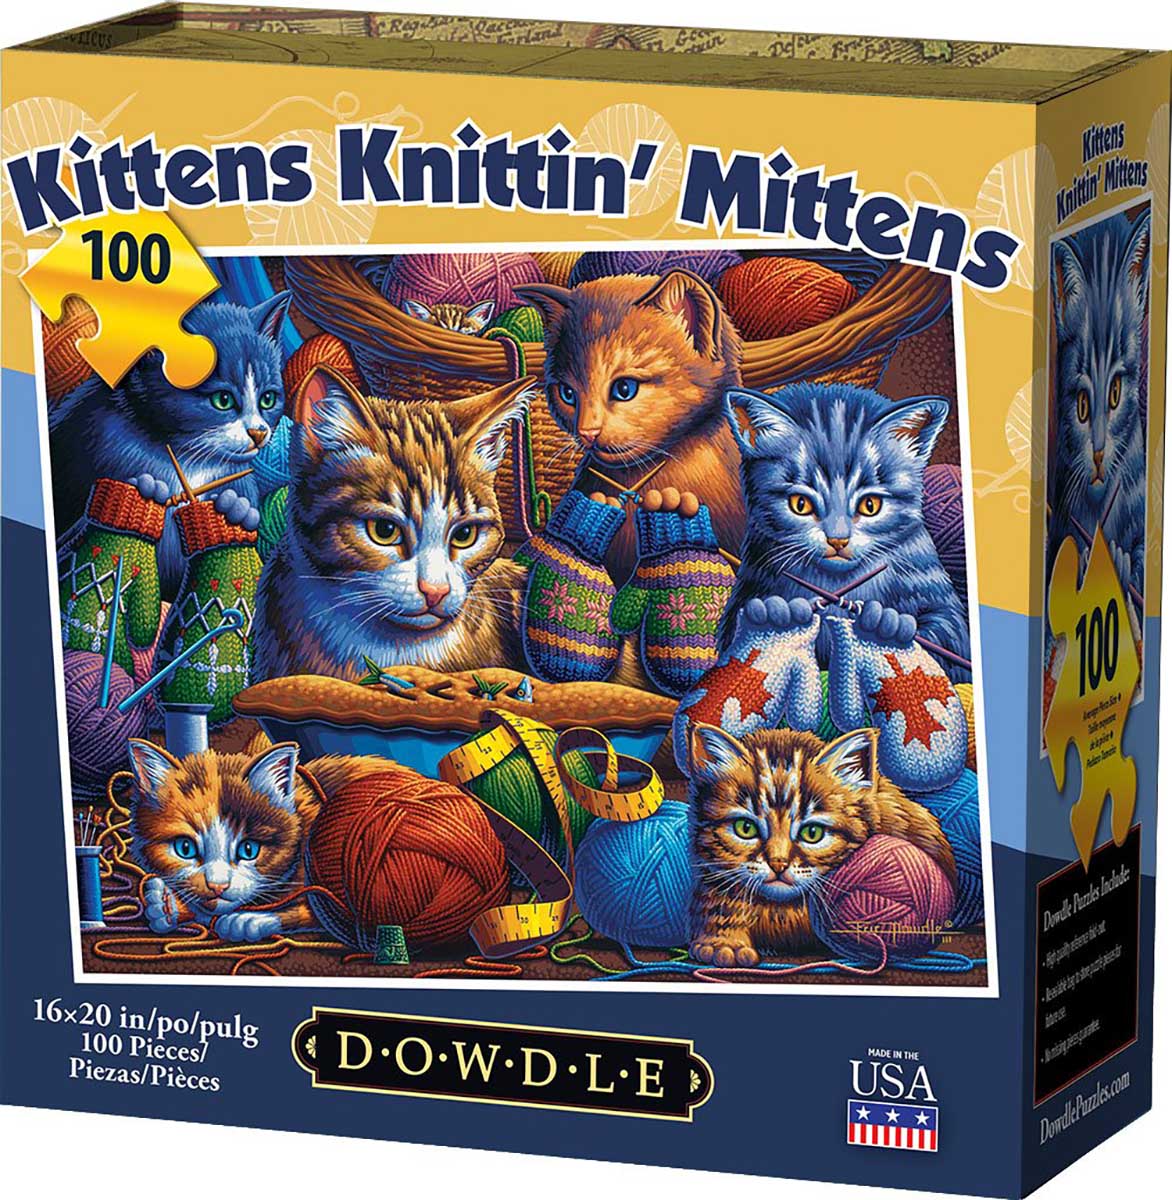 Kittens Knittin' Mittens